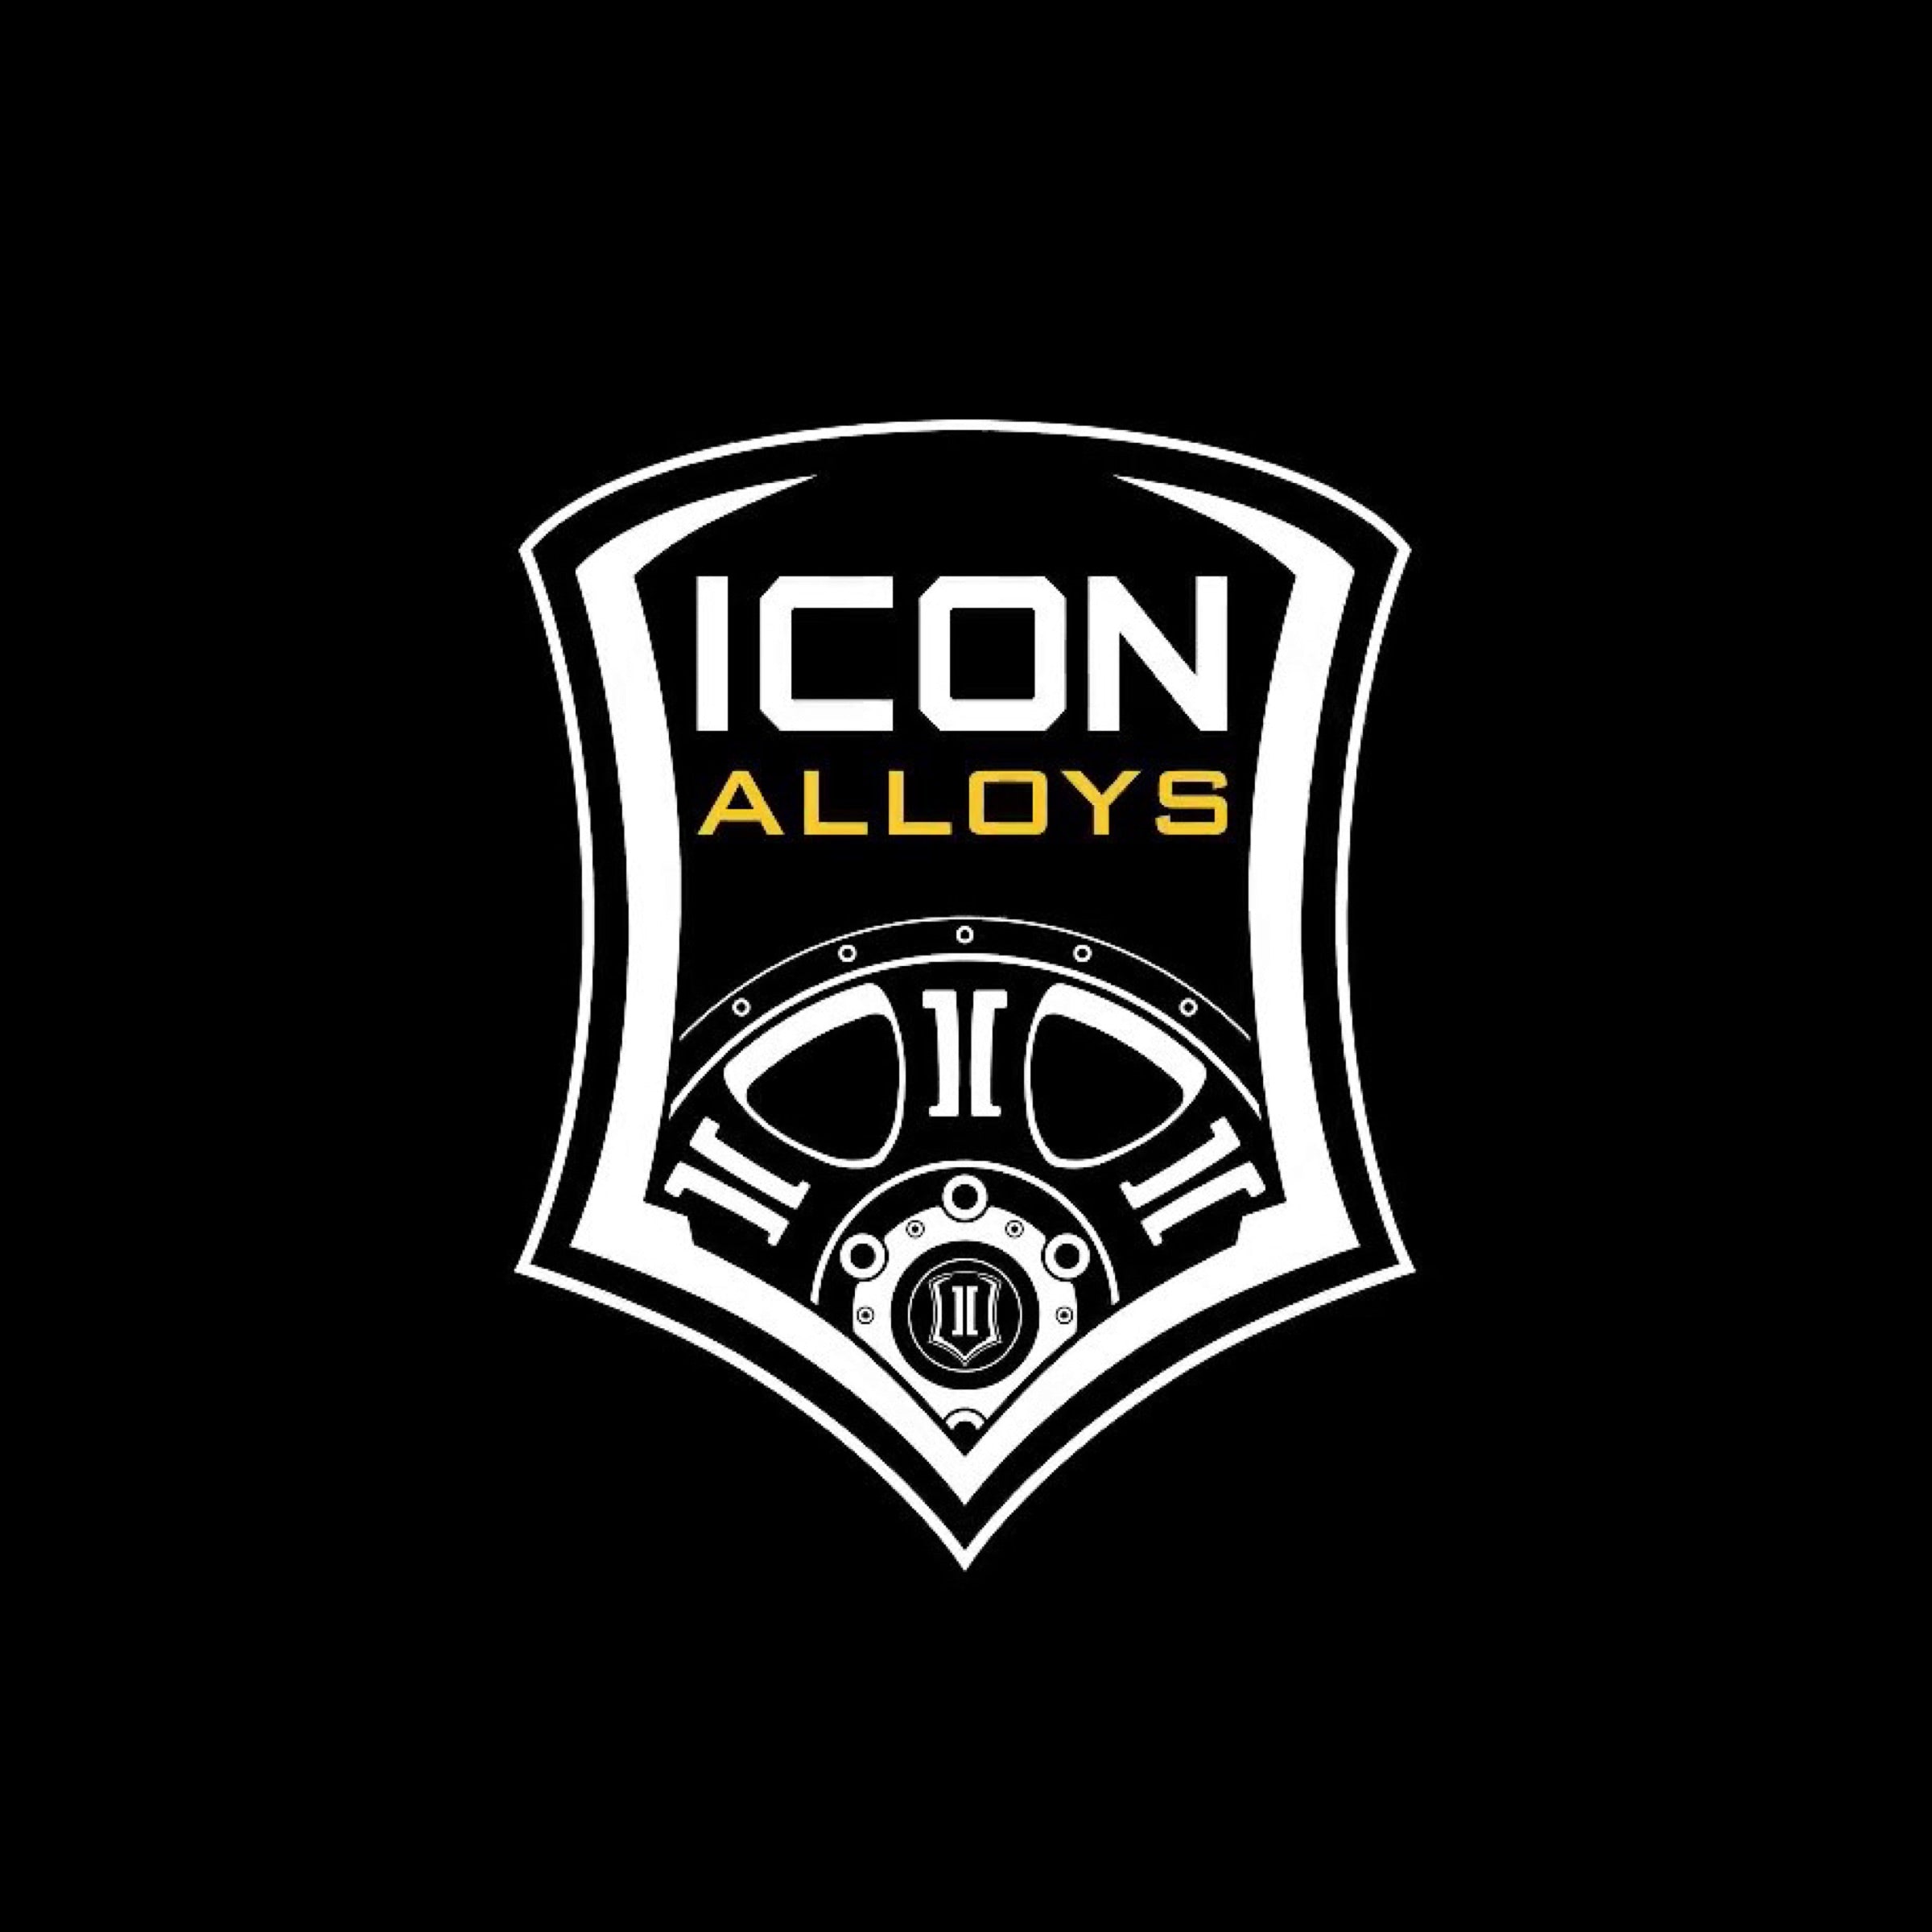 Icon Alloys logo with black background